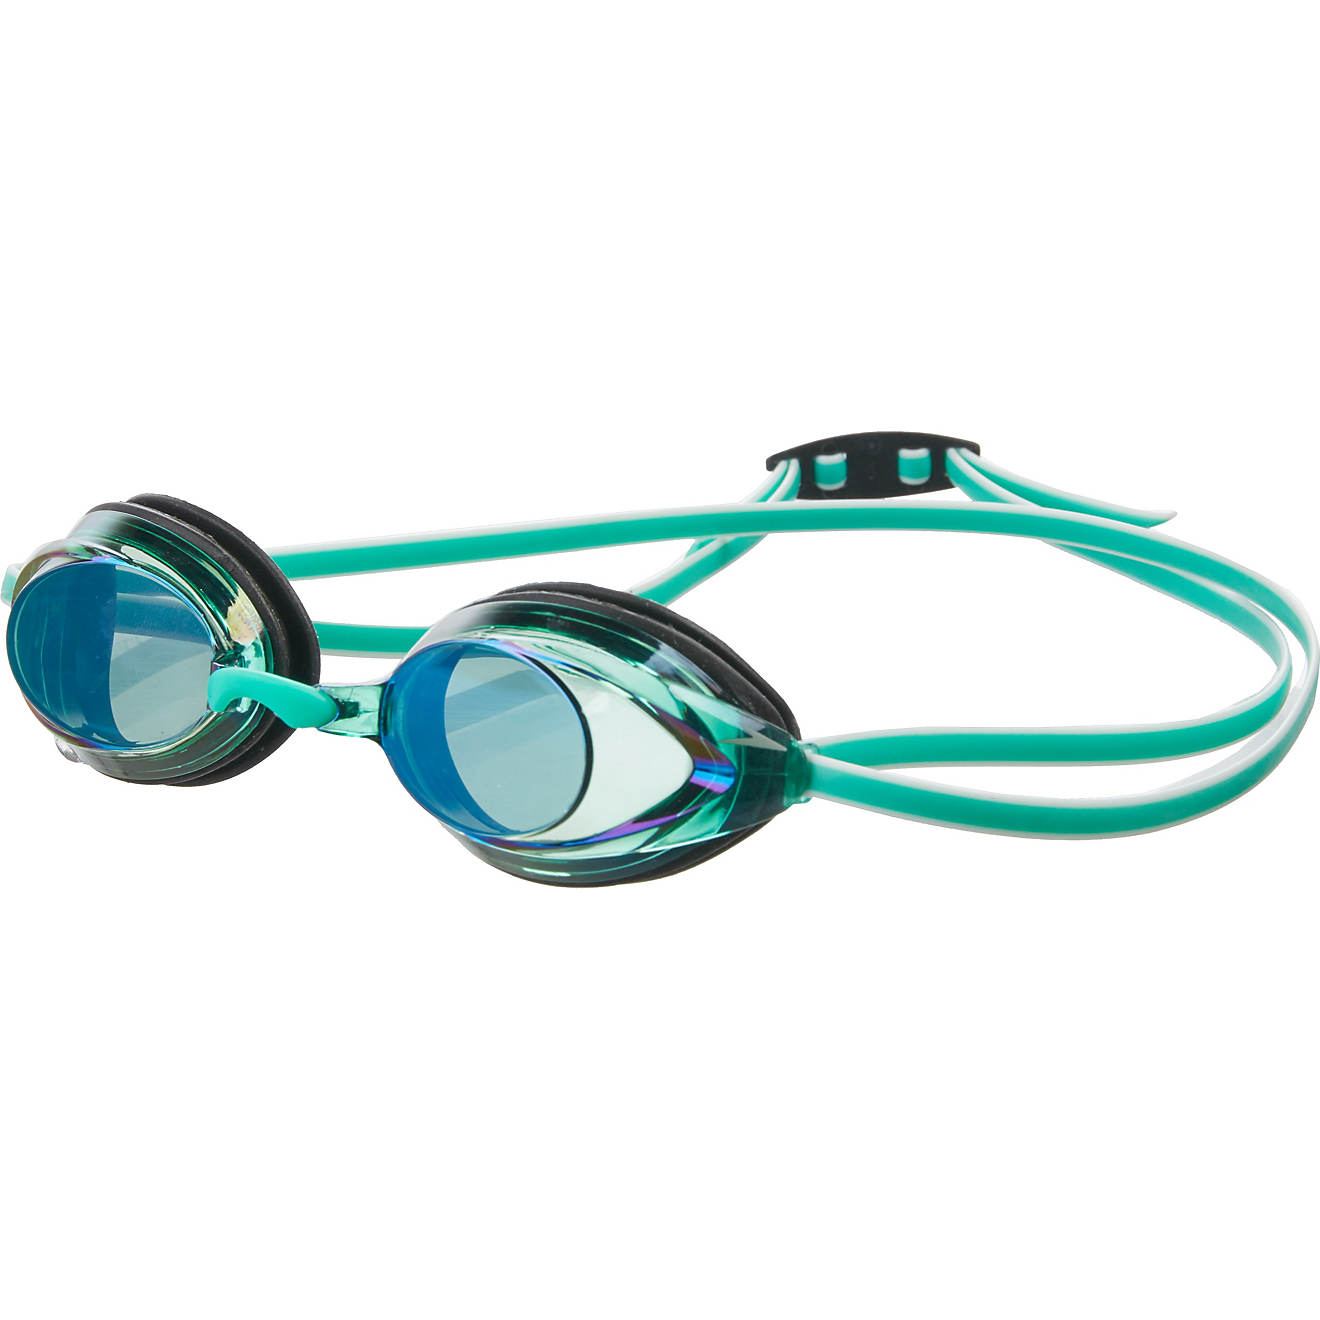 Speedo Unisex-Adult Swim Goggles Vanquisher Extended View